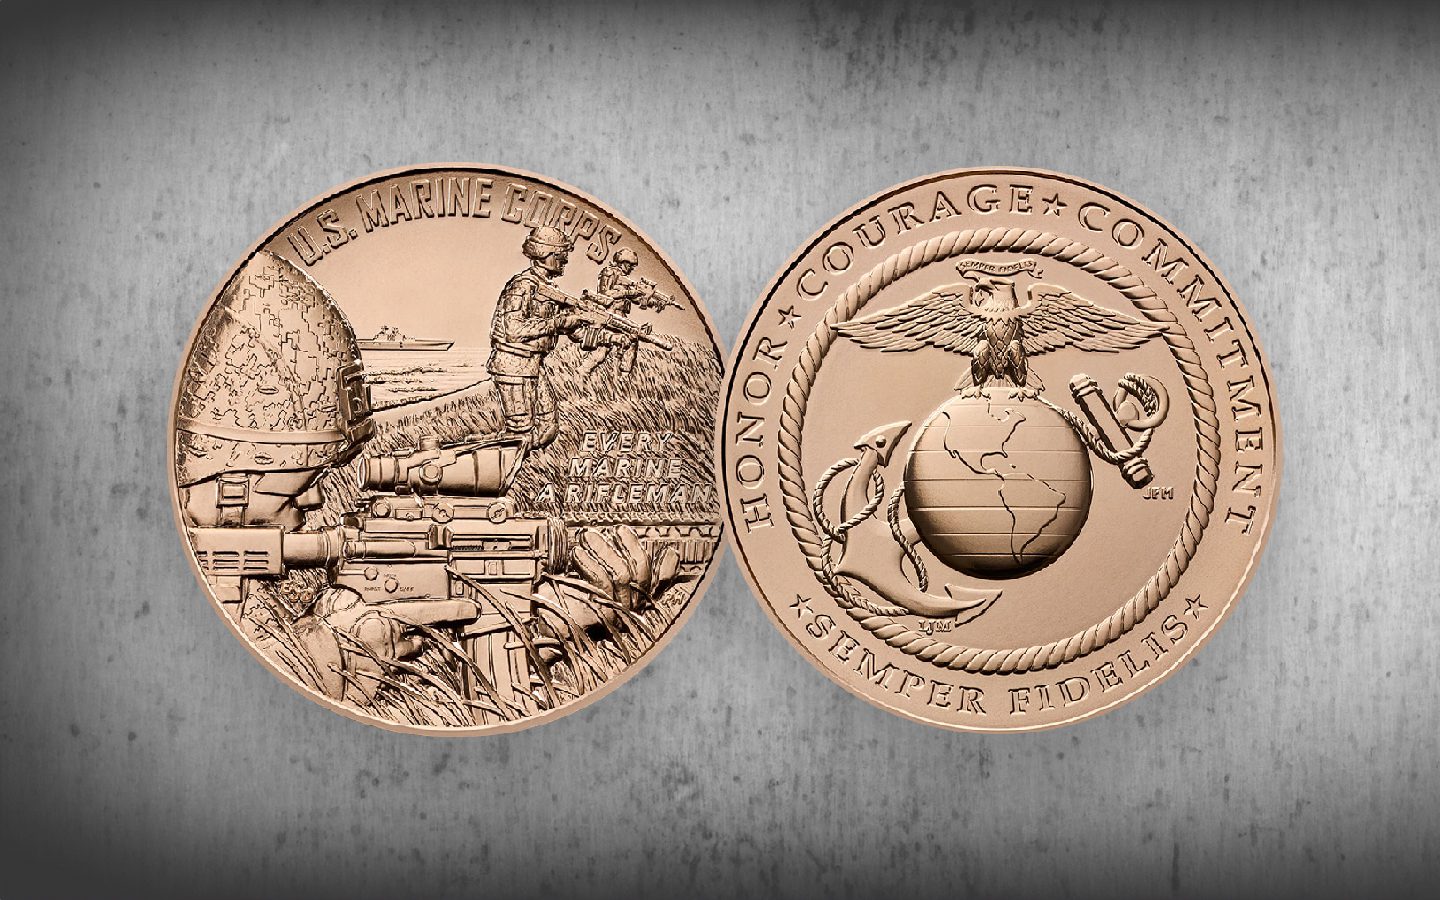 Marine Corps Medal